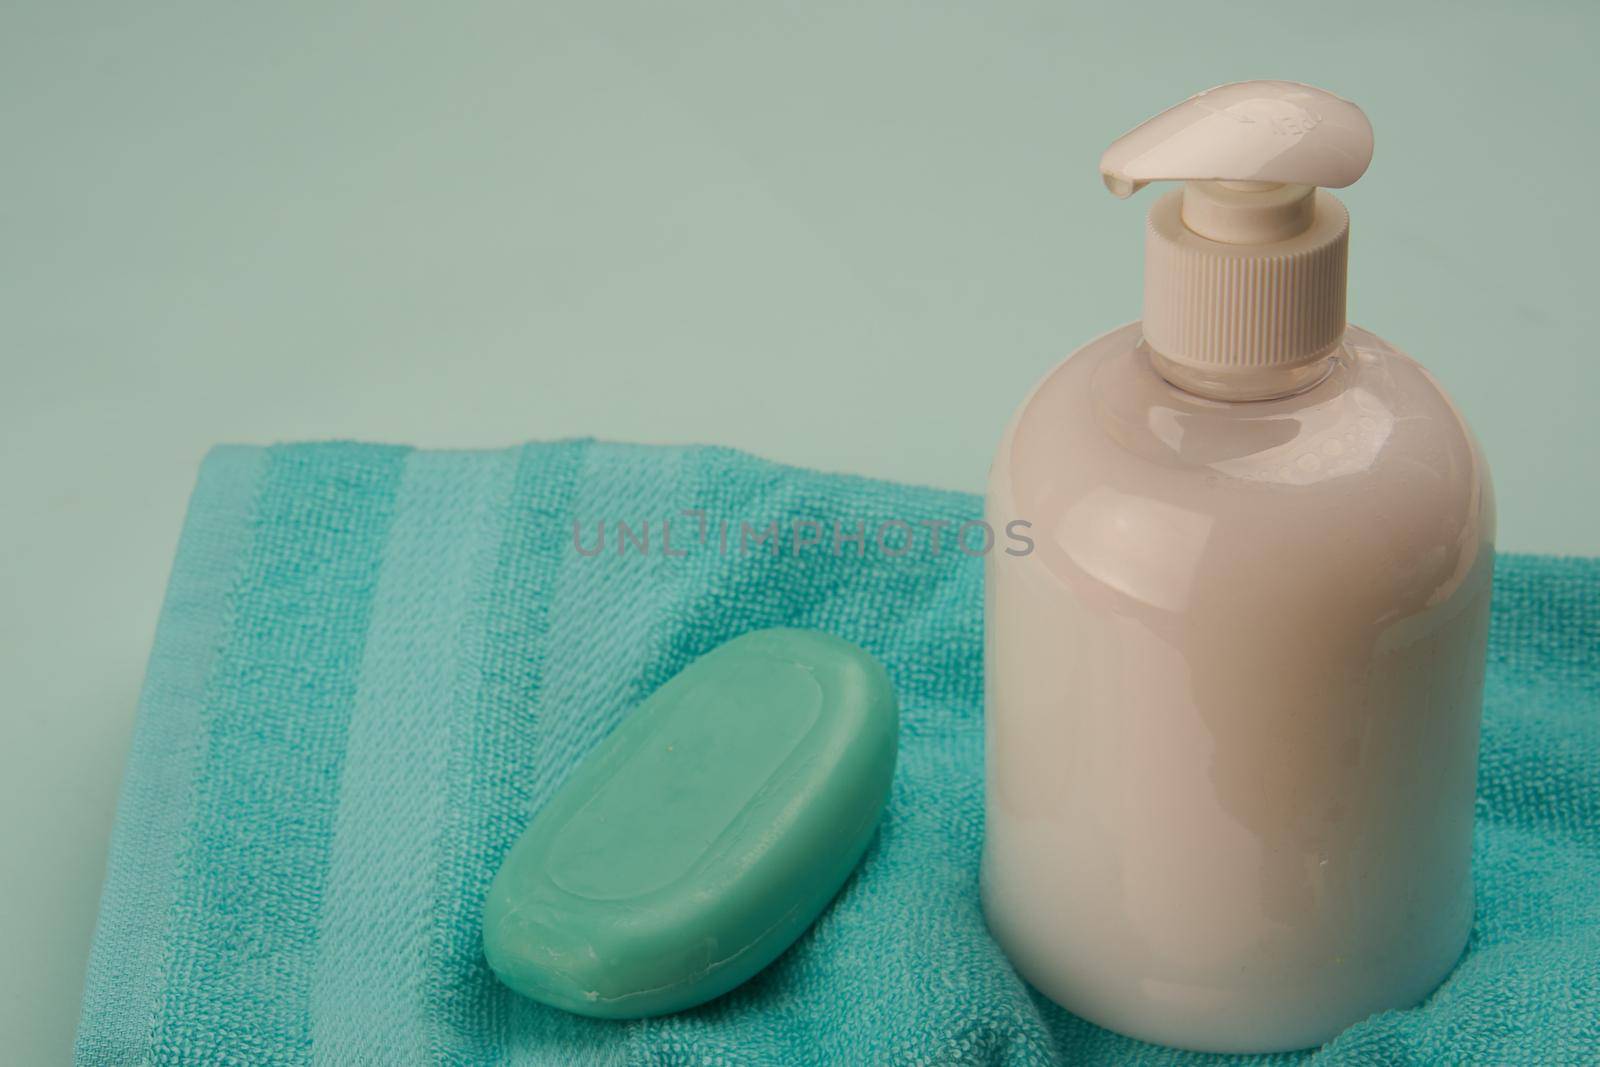 liquid soap hygiene body care accessories bathroom supplies by Vichizh